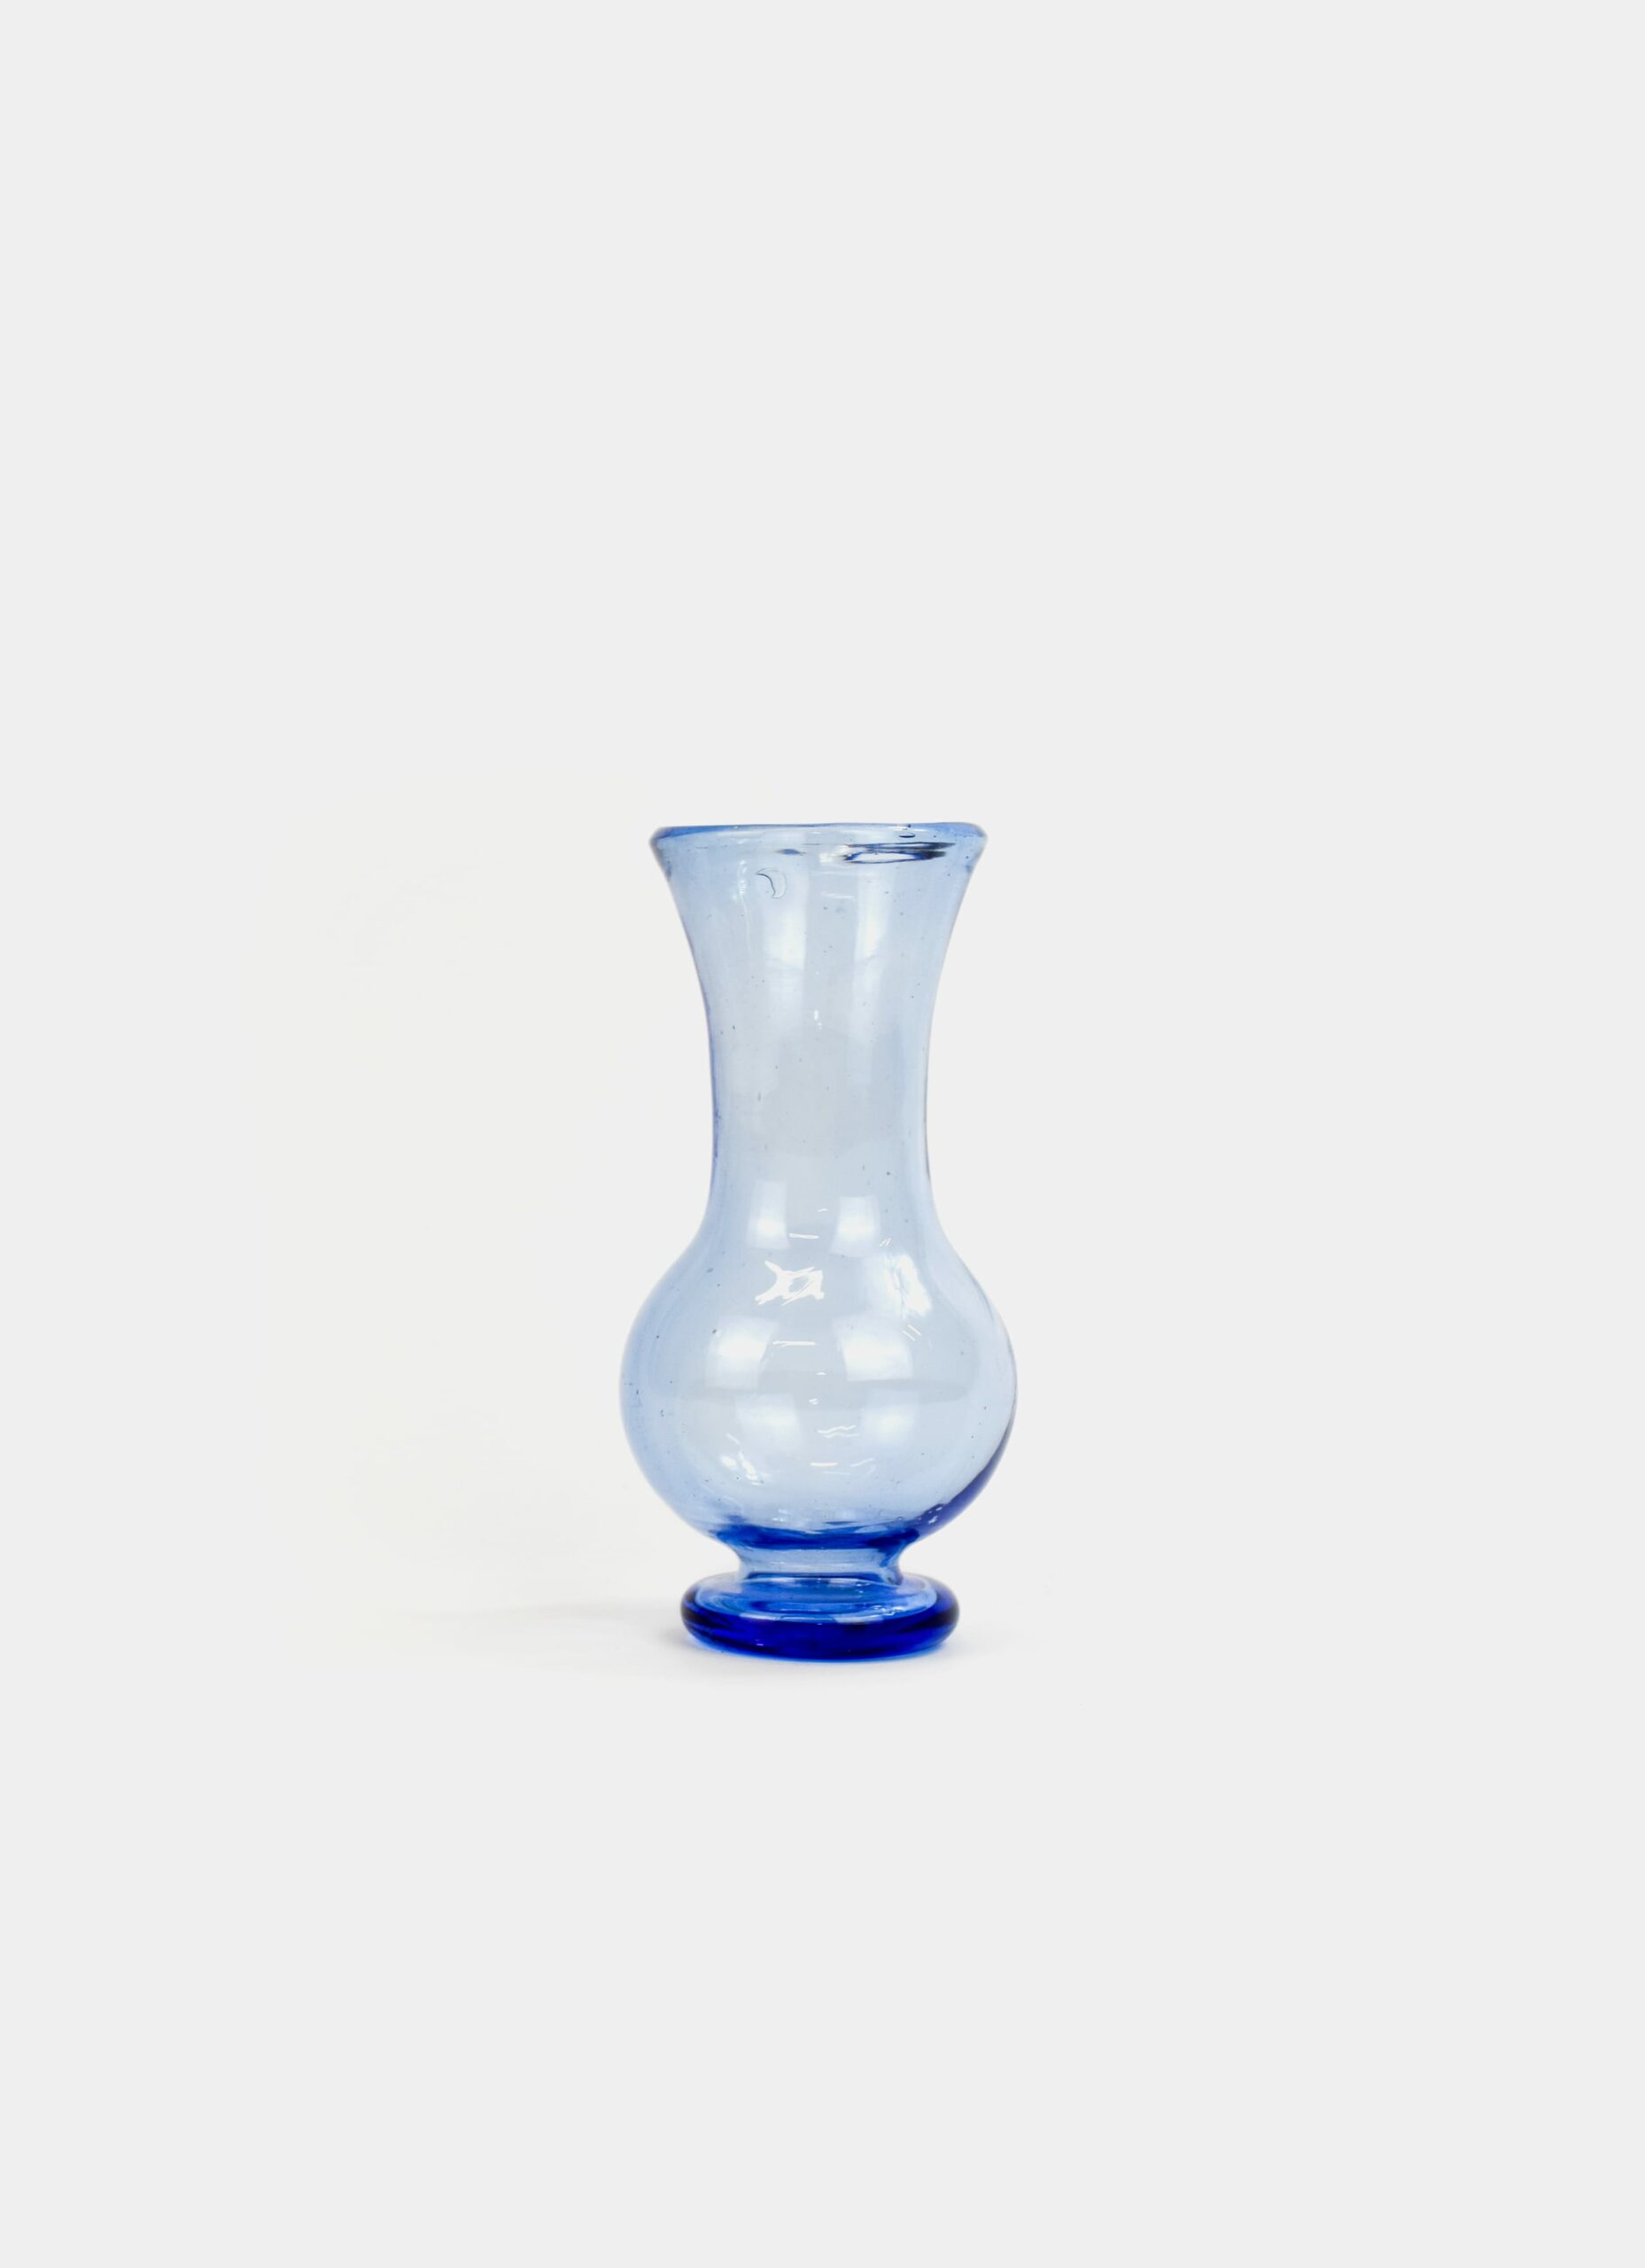 La Soufflerie - Silhouette - Glass Carafe - Light Blue